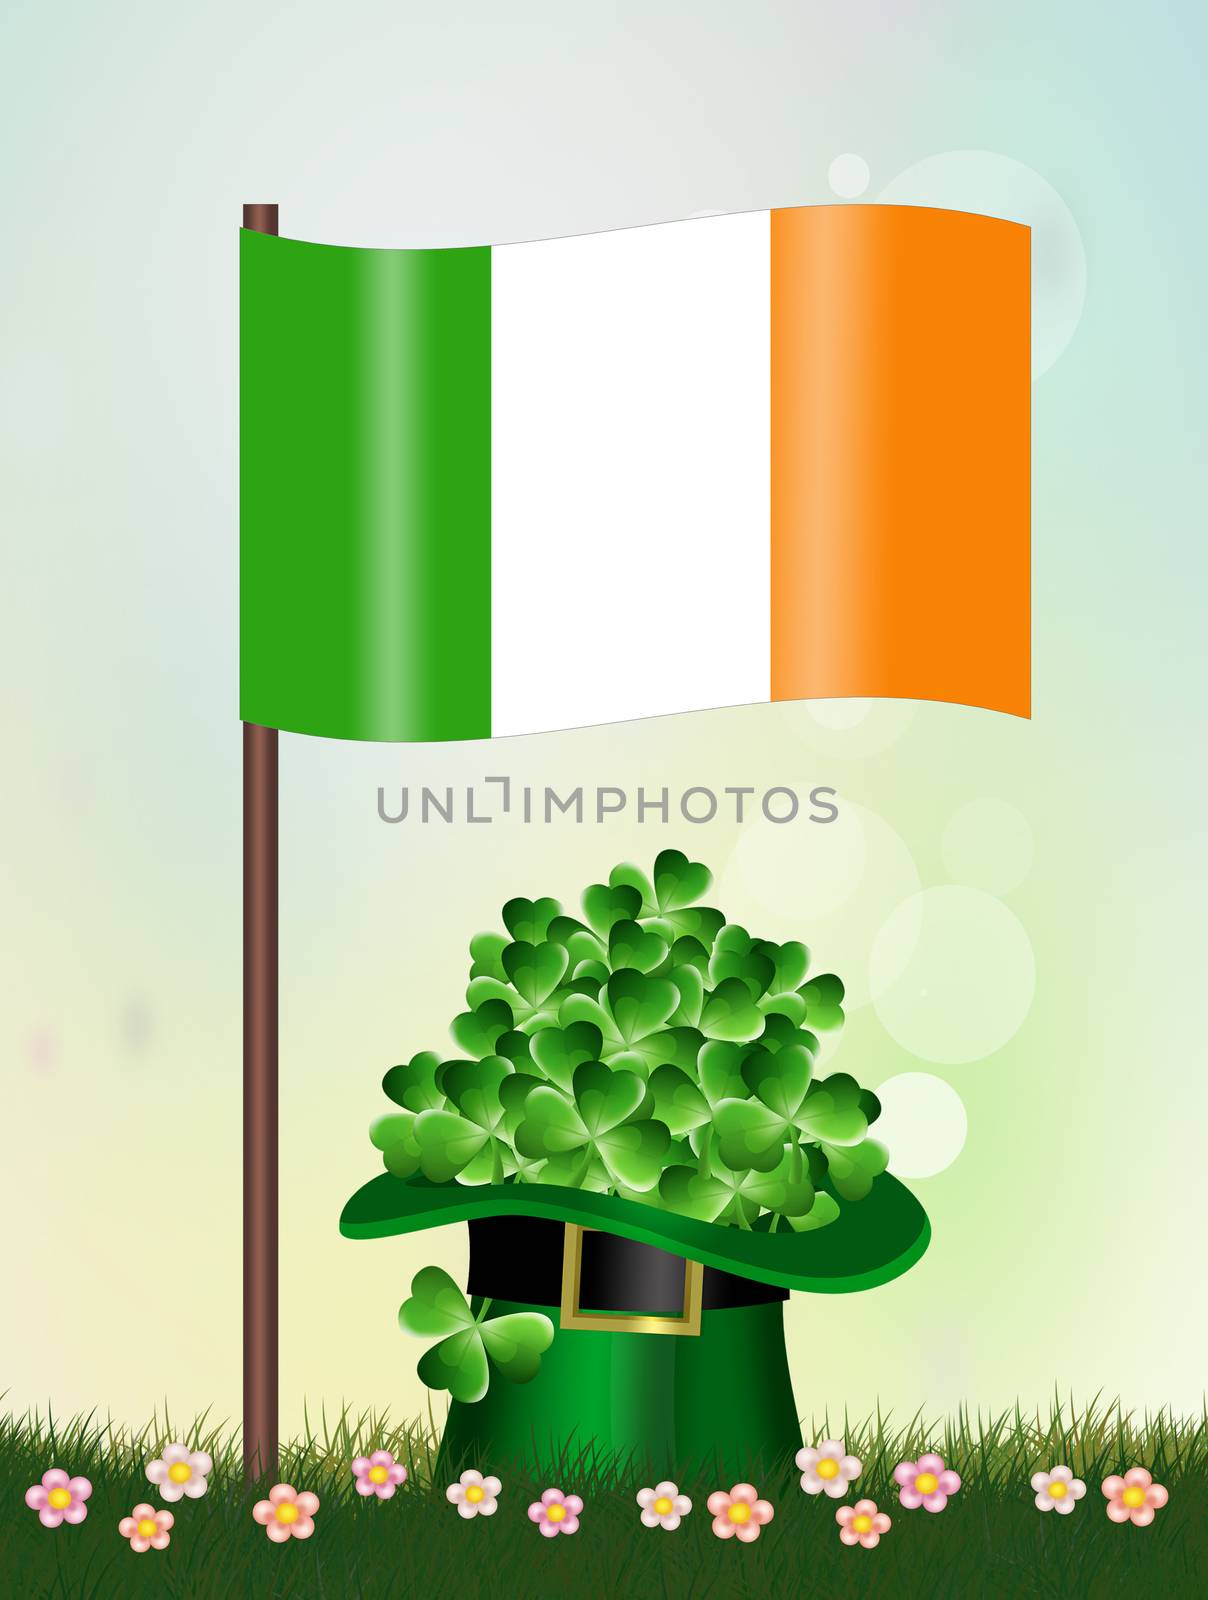 Irish flag for St. Patrick's Day